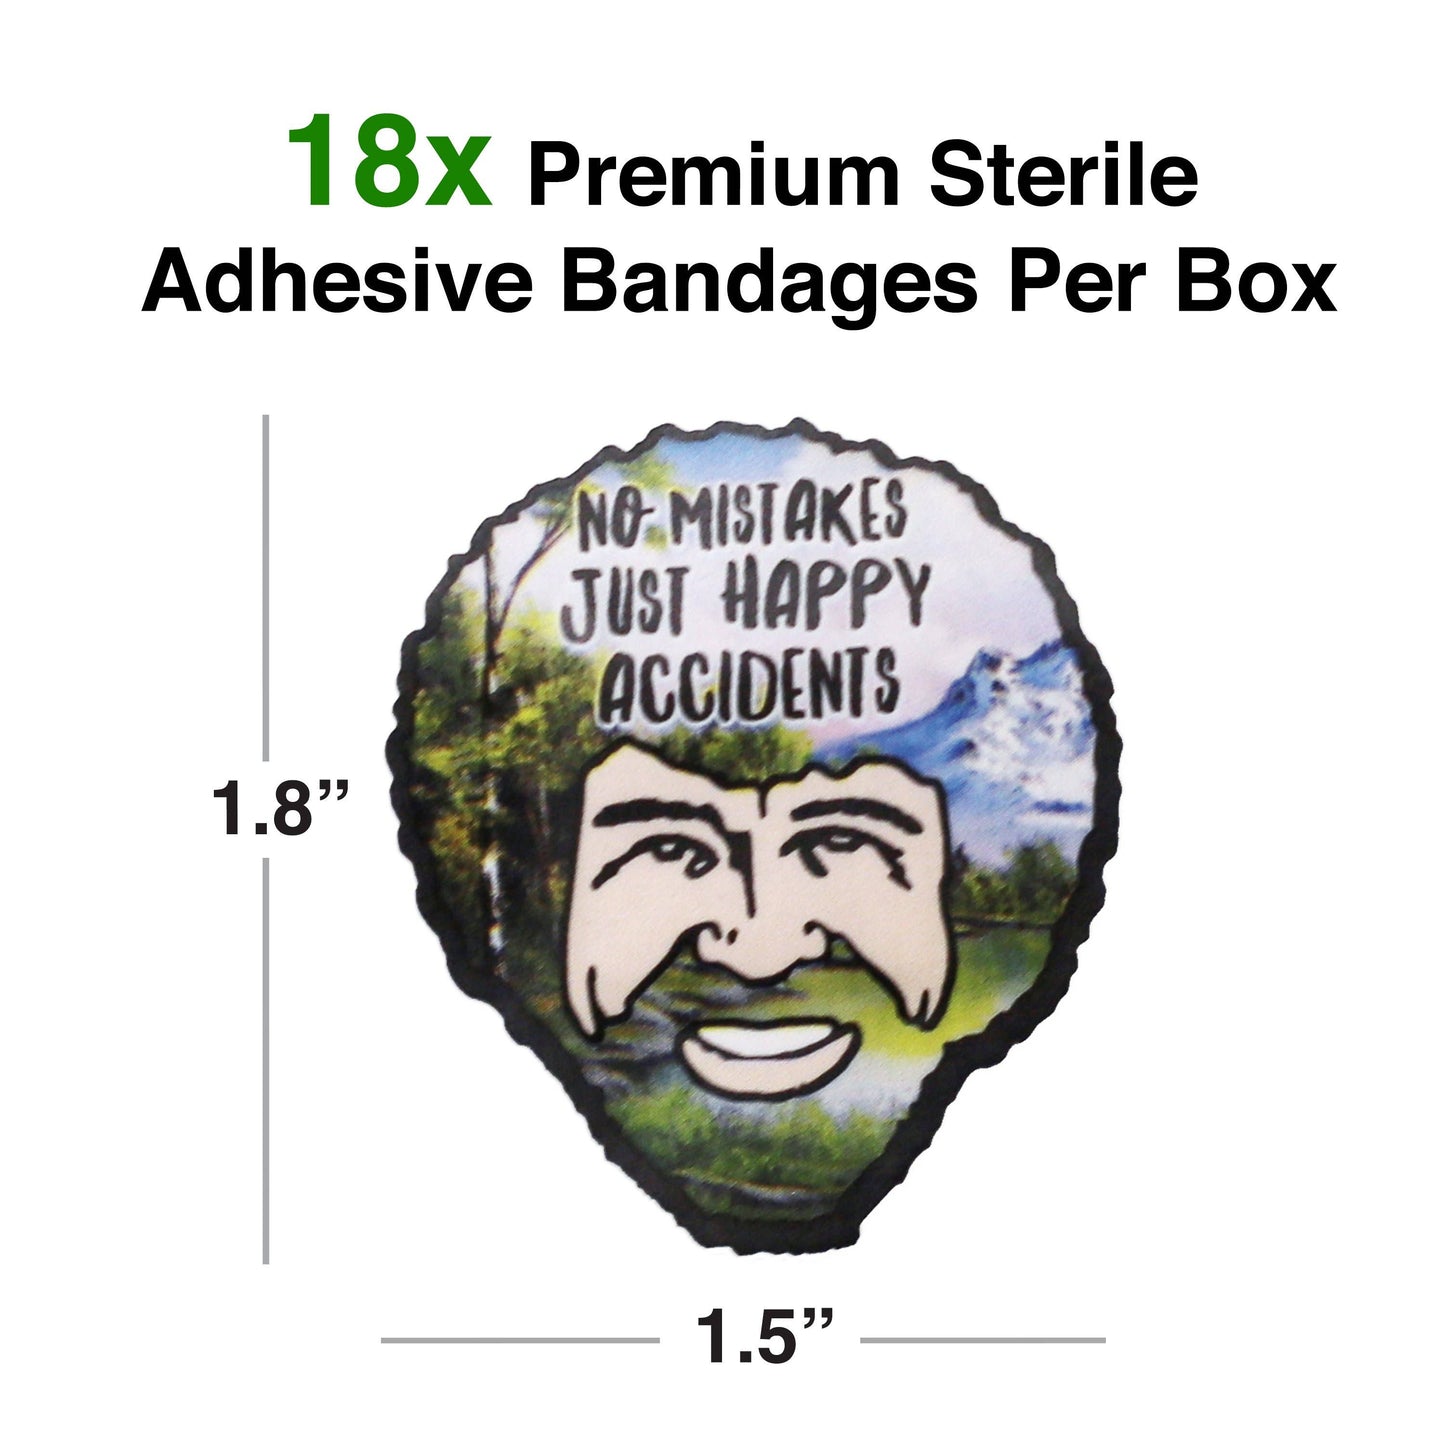 Bob Ross Adhesive Bandages